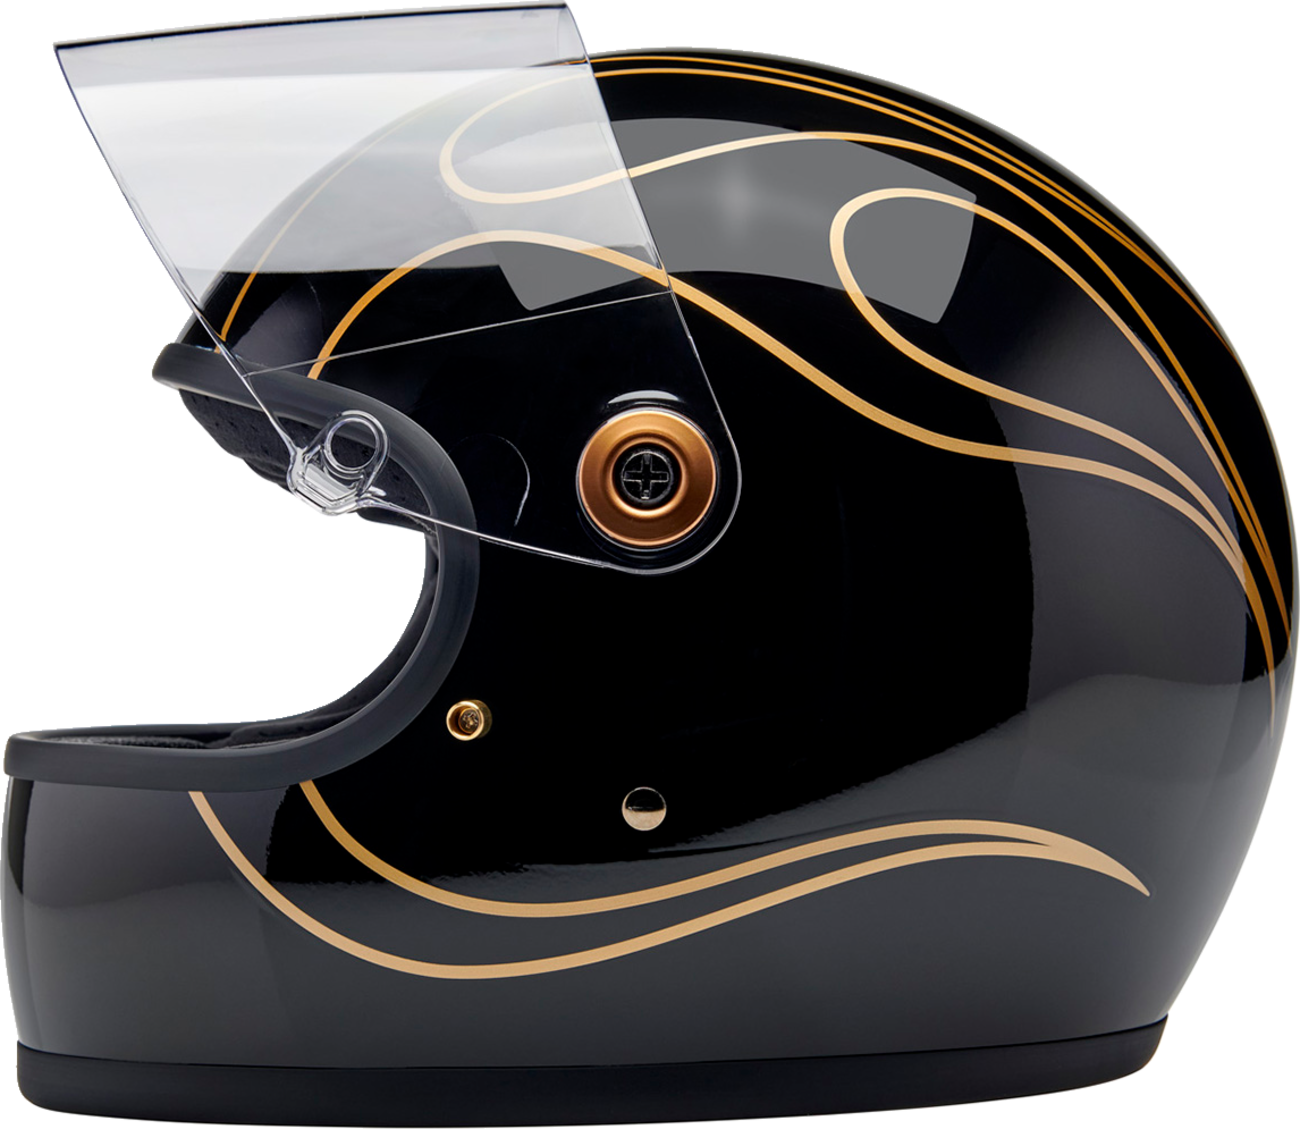 BILTWELL Gringo S Helmet - Gloss Black Flames - XL 1003-567-505